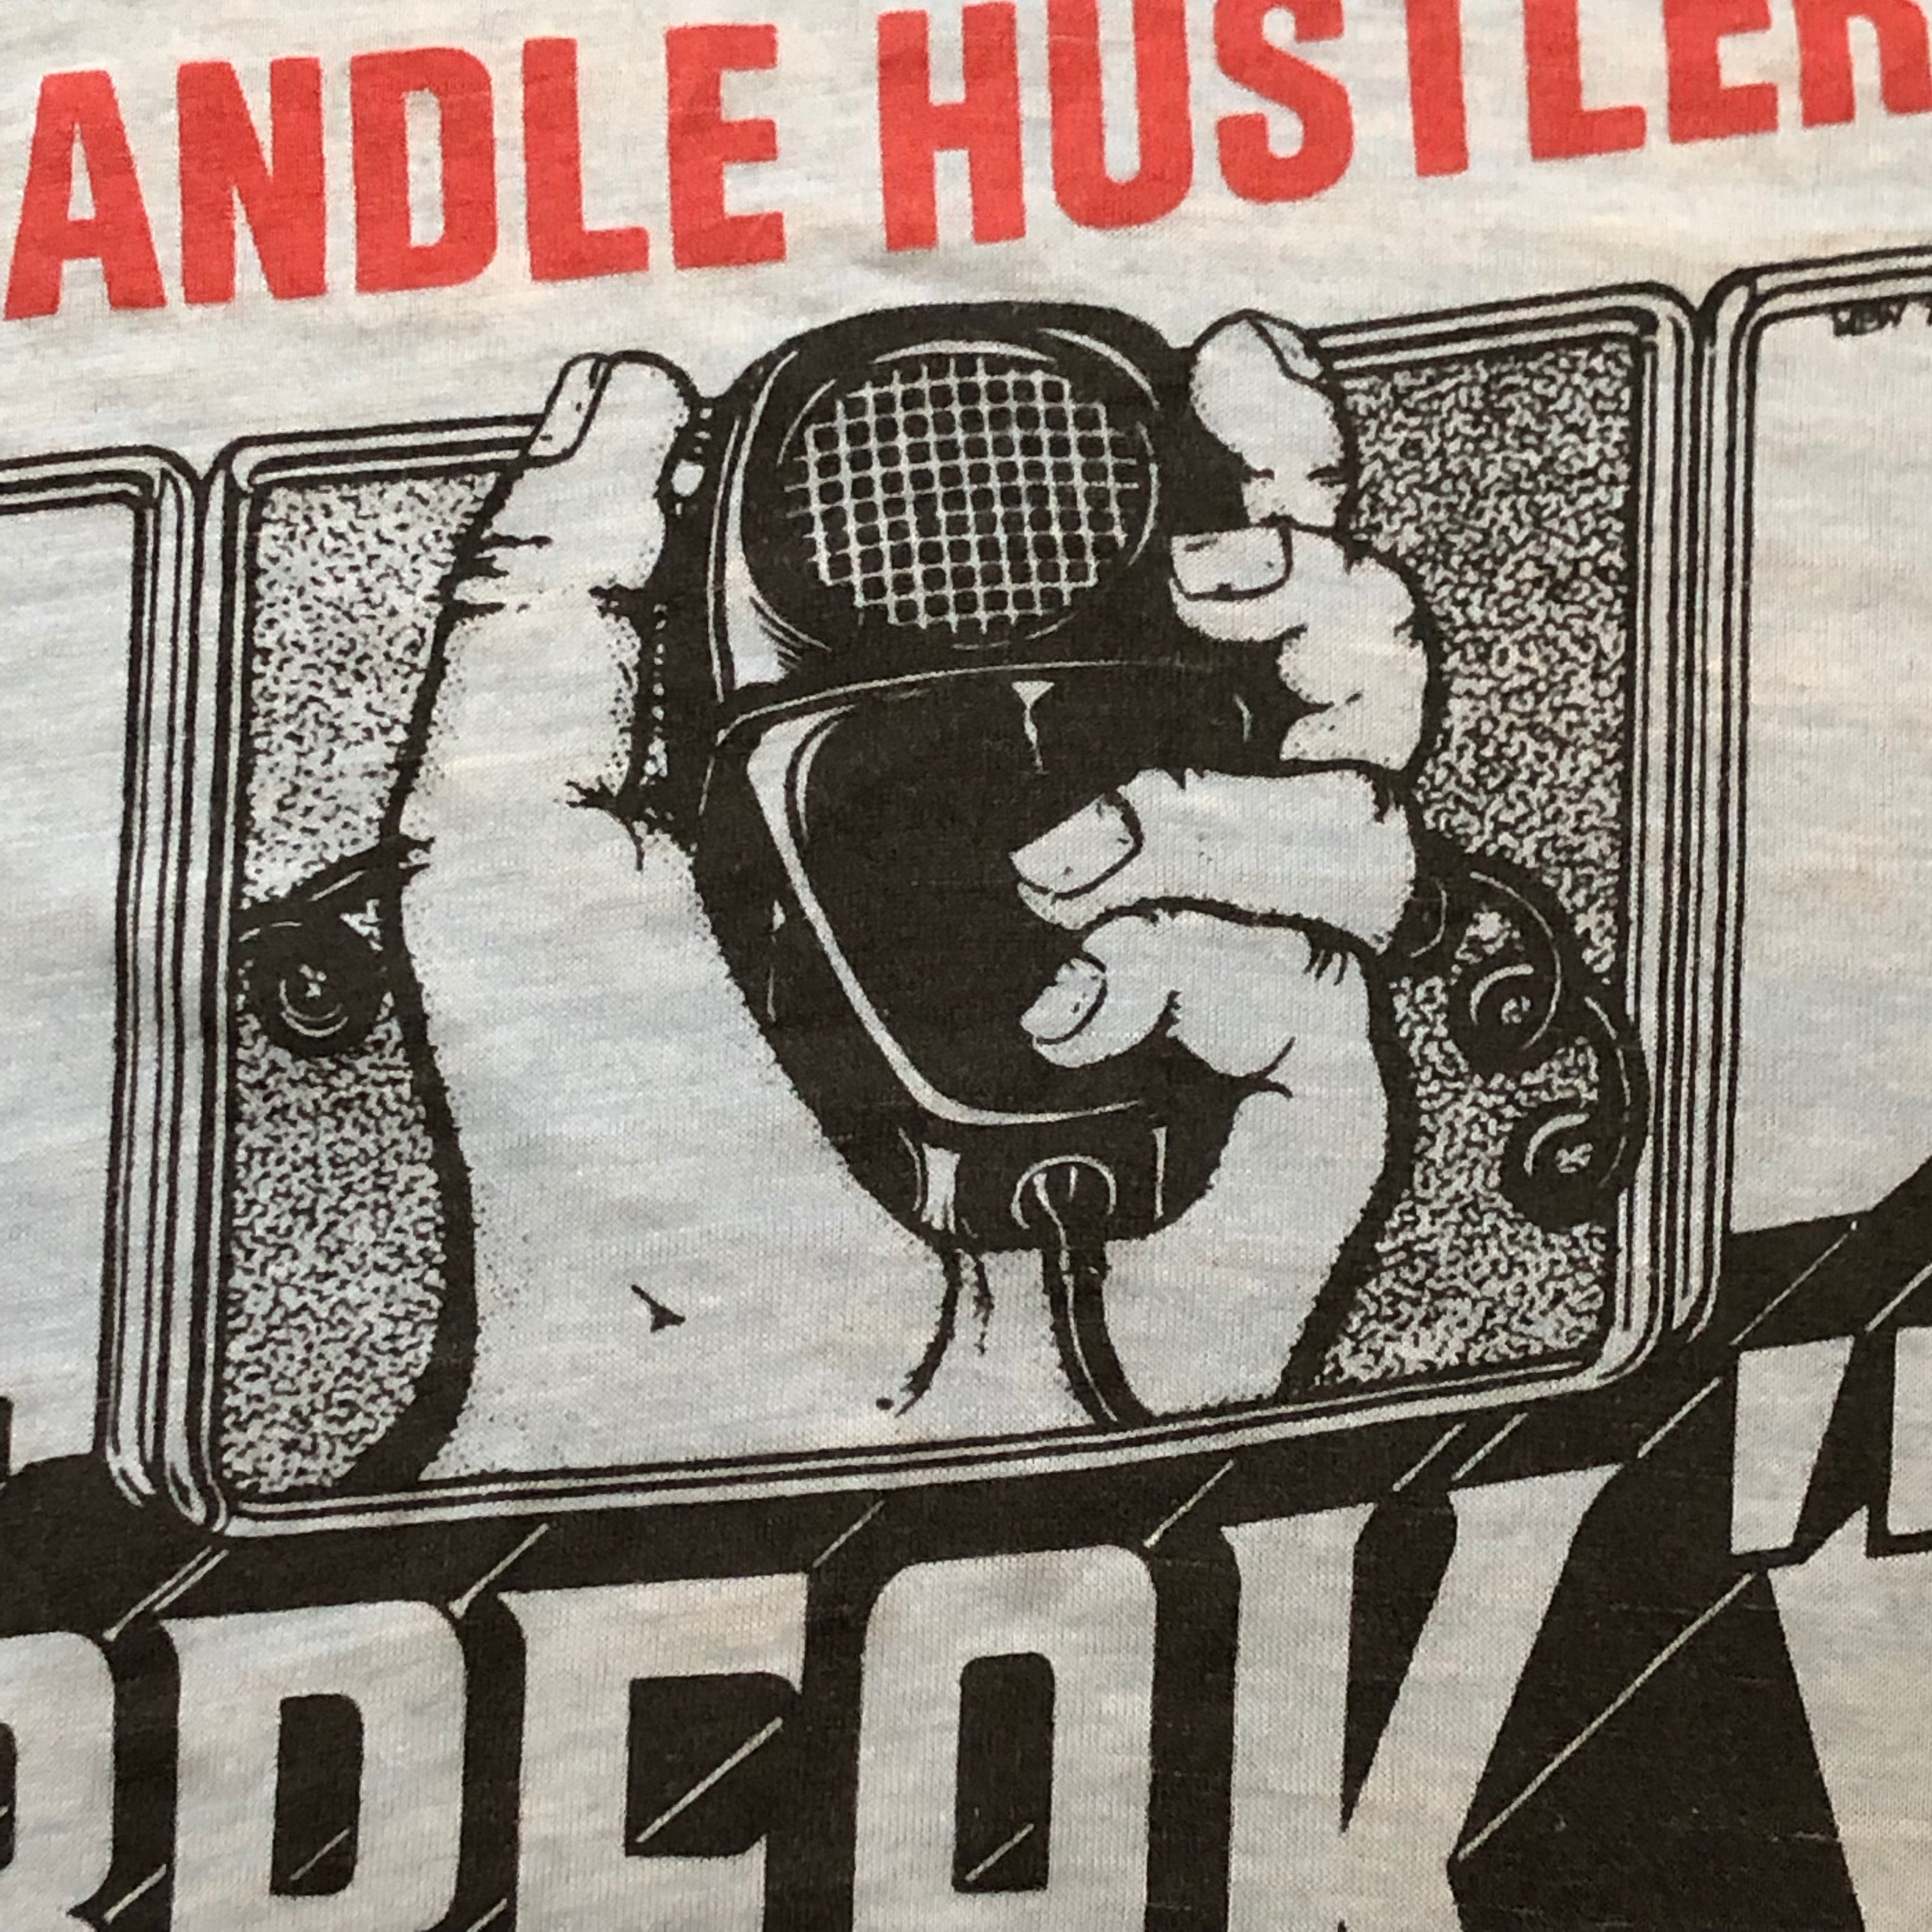 Vintage Handle Hustlers T Shirt | Medium 1980s